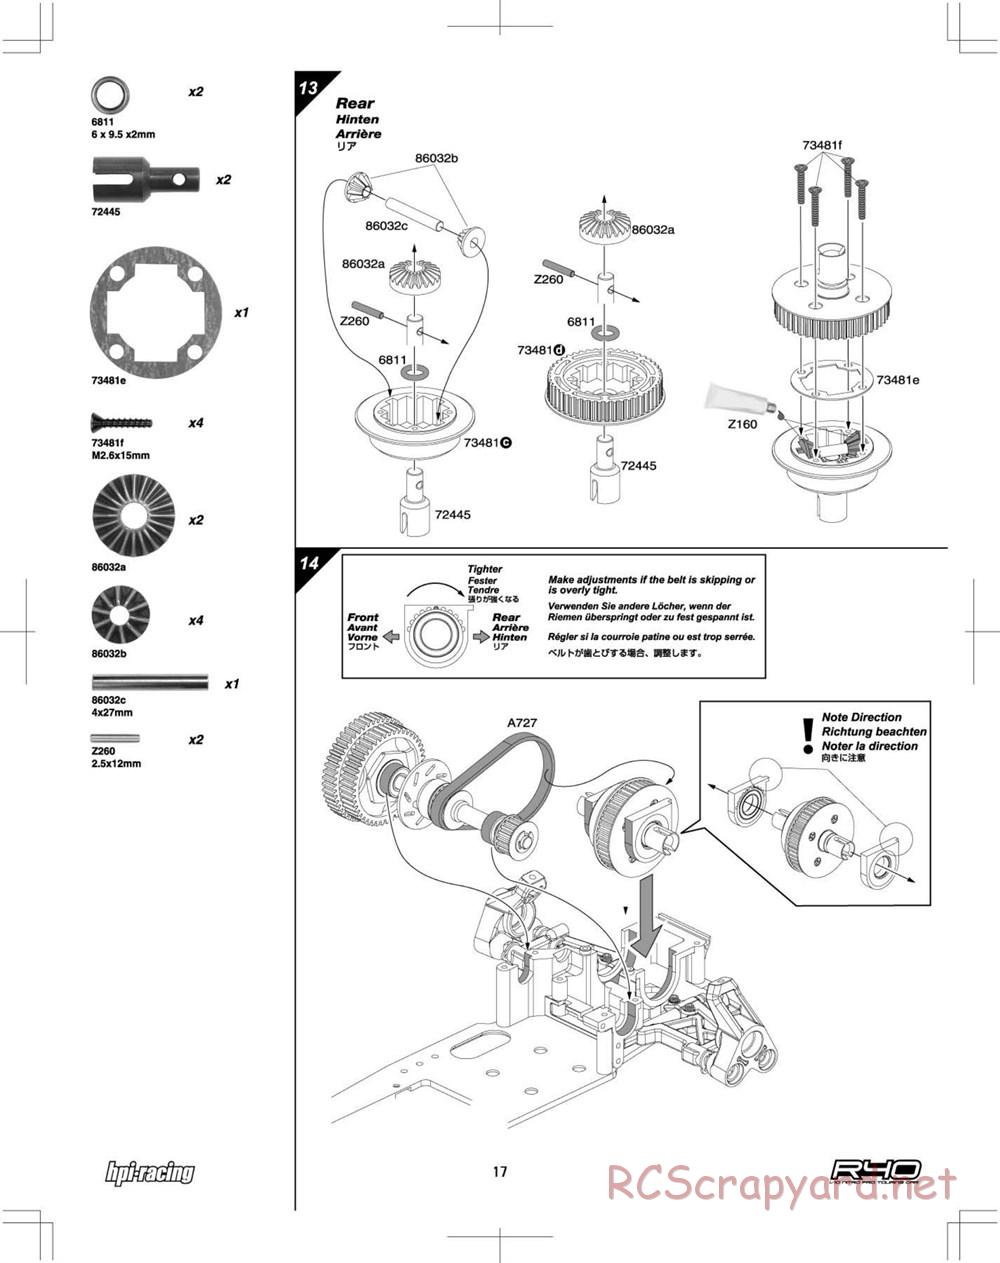 HPI - R40 Nitro Touring Car - Manual - Page 17